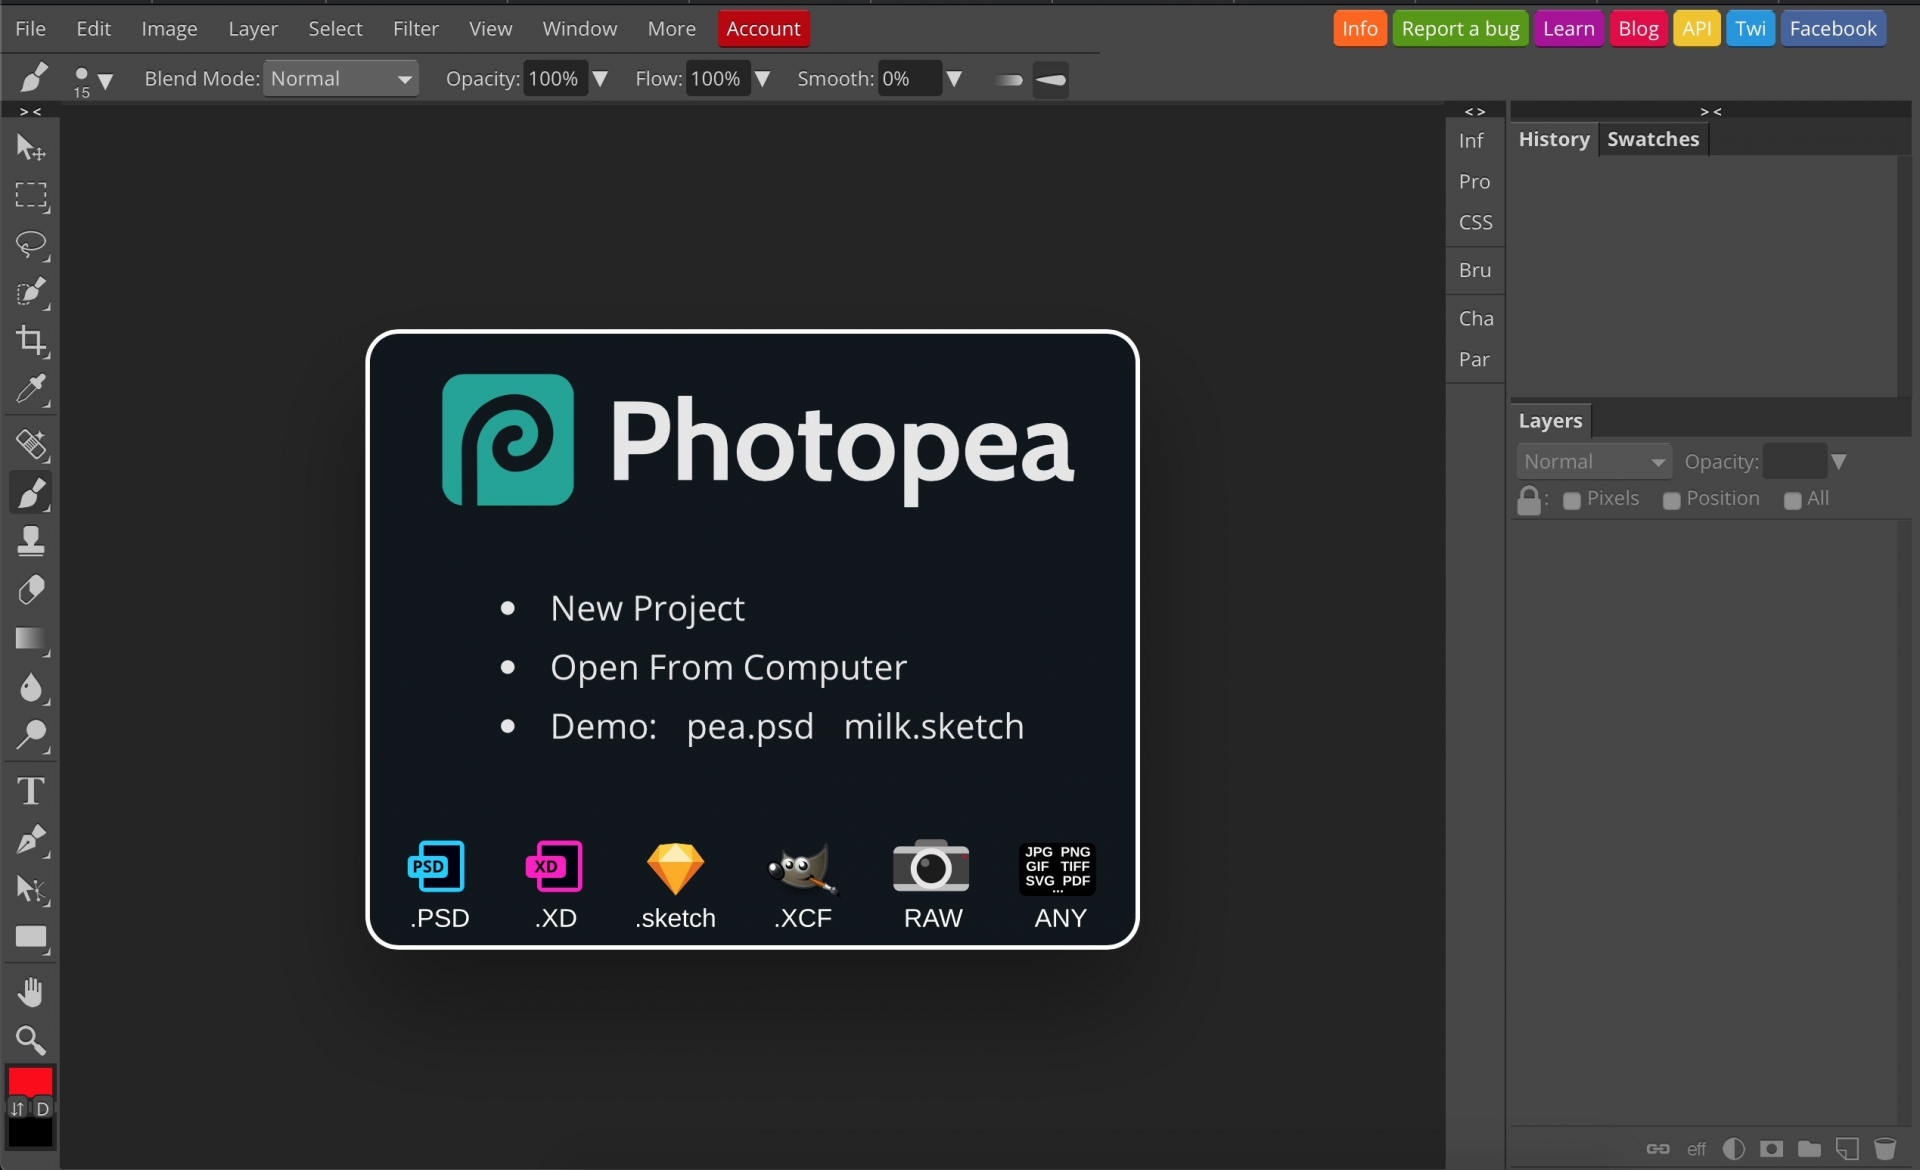 Photopea has Photoshop-like design